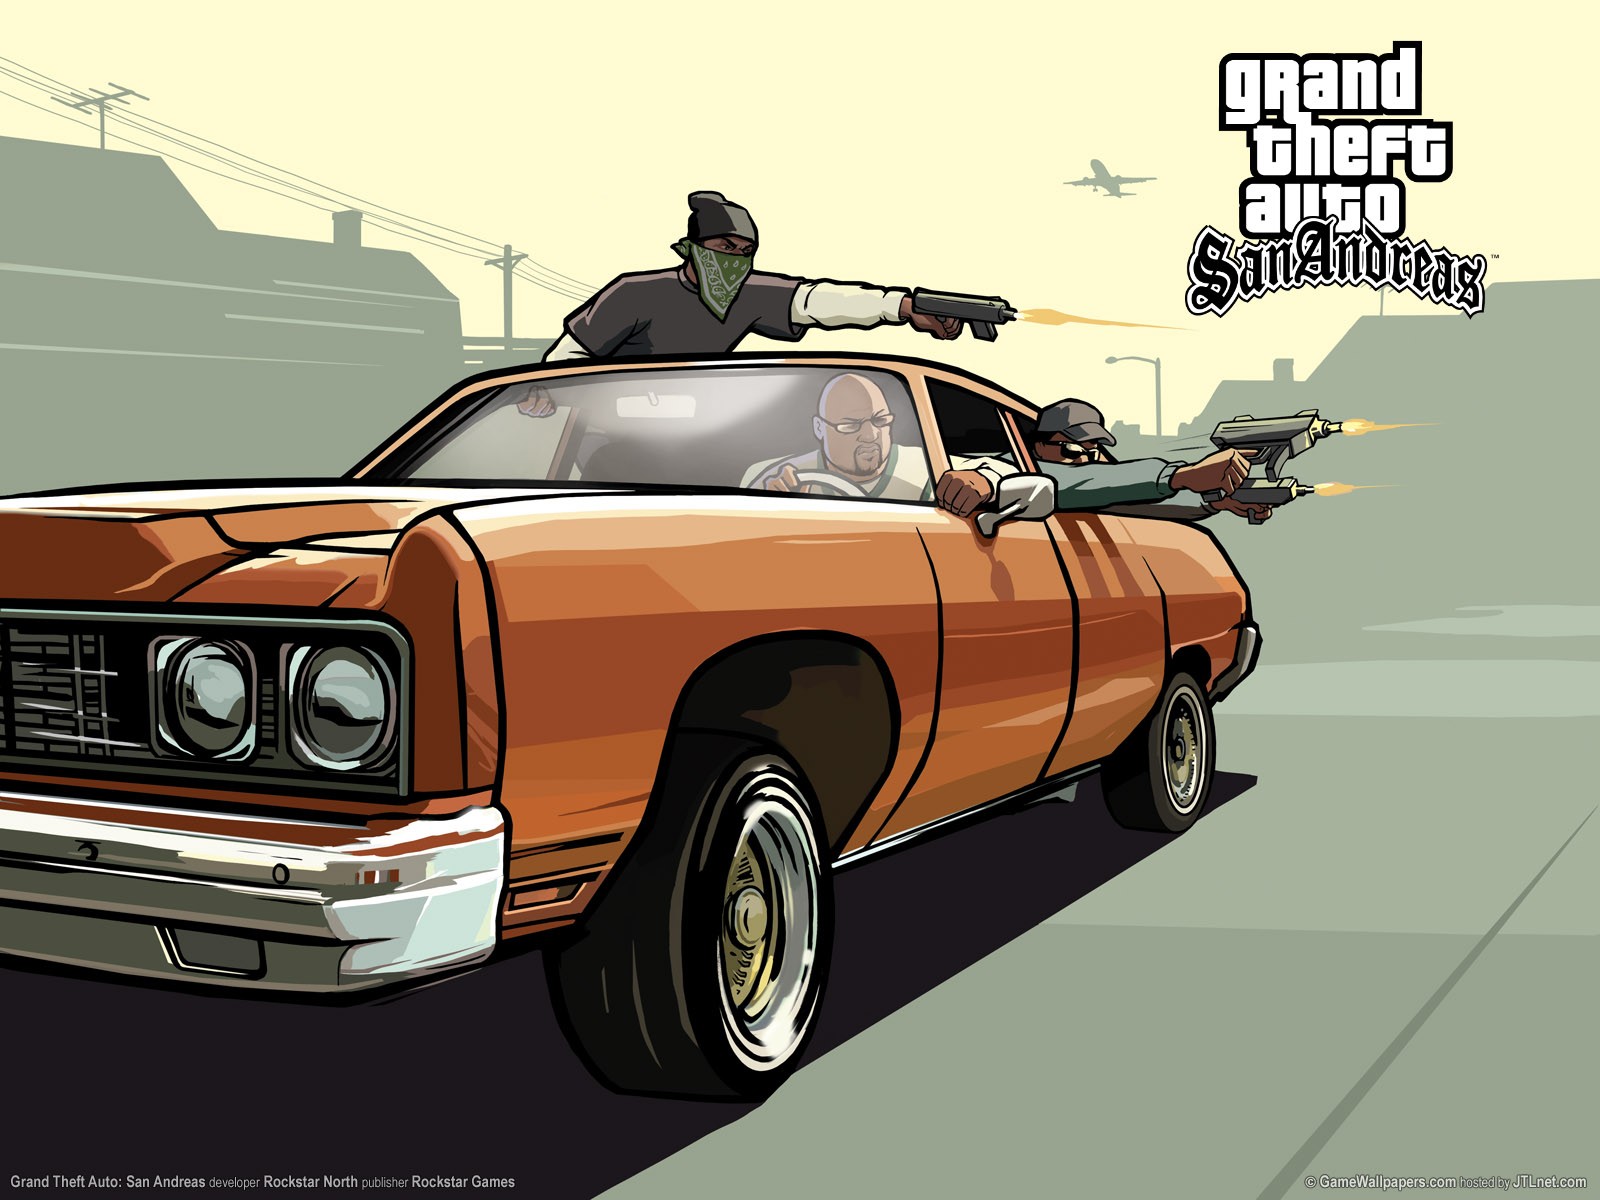 Grand Theft Auto San Andreas Jeu Playstation Image Vid Os